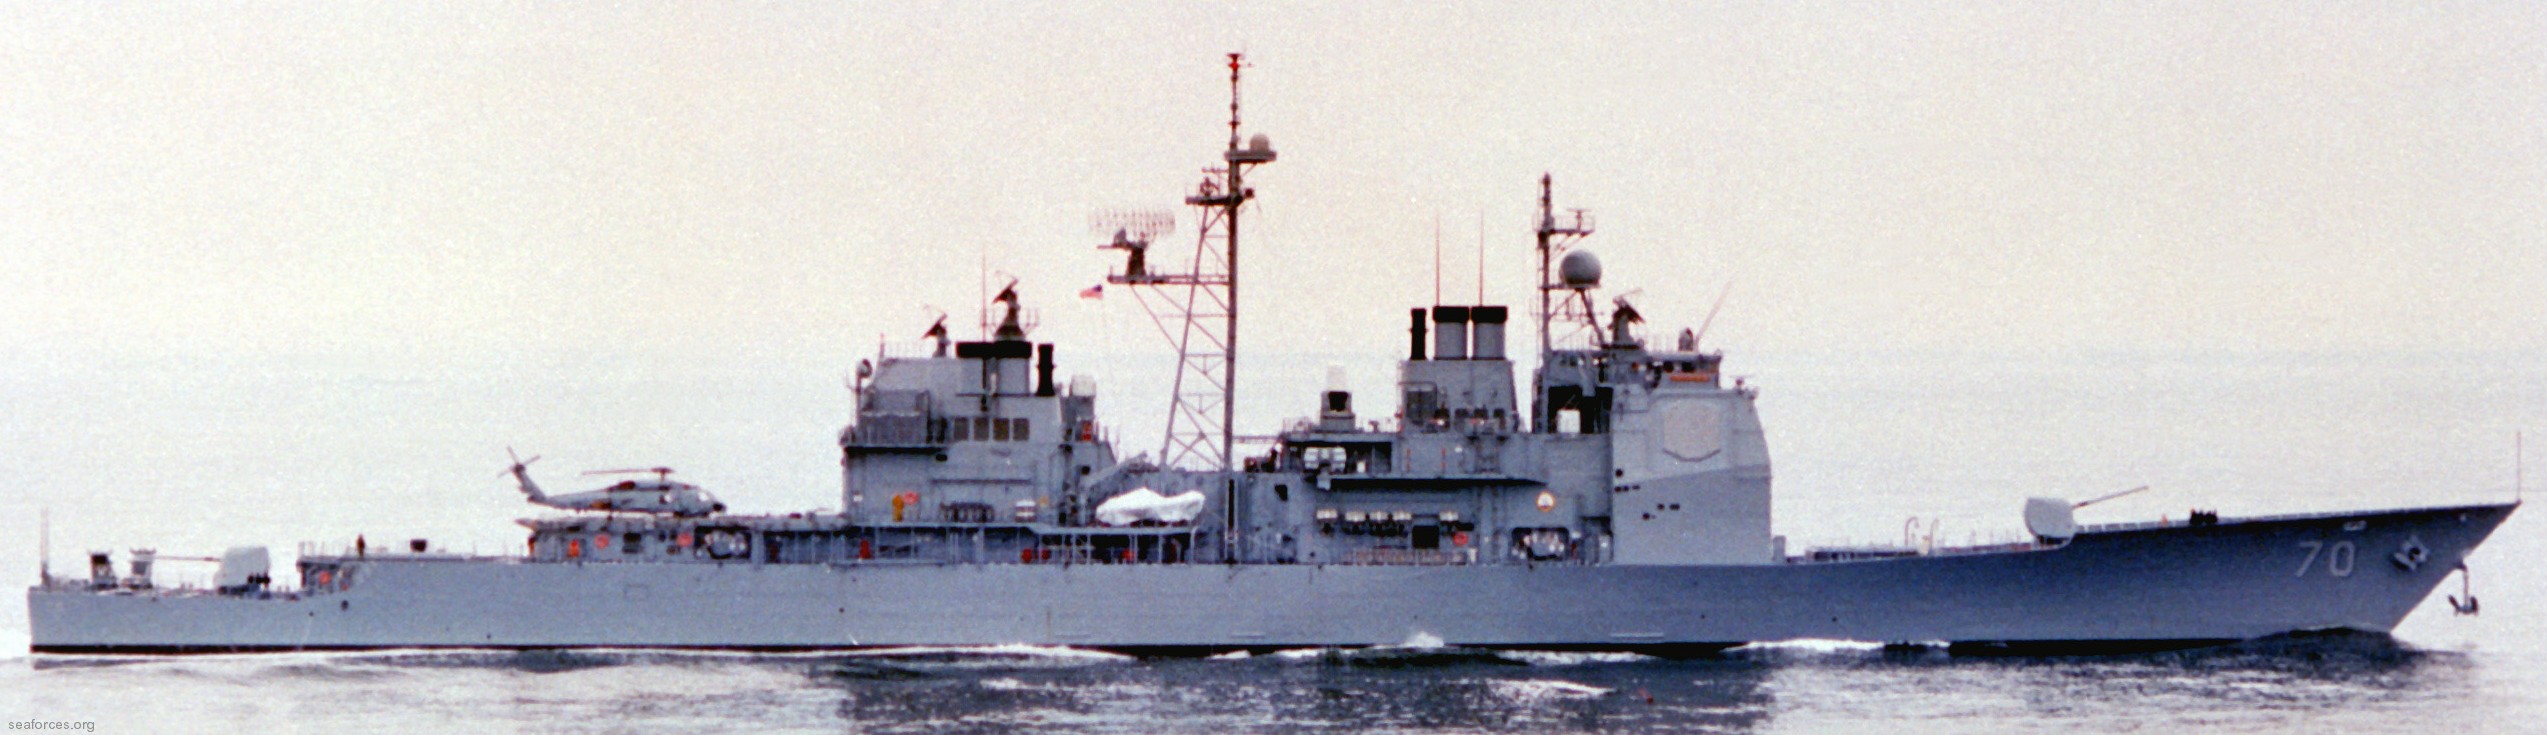 cg-70 uss lake erie ticonderoga class guided missile cruiser navy 69